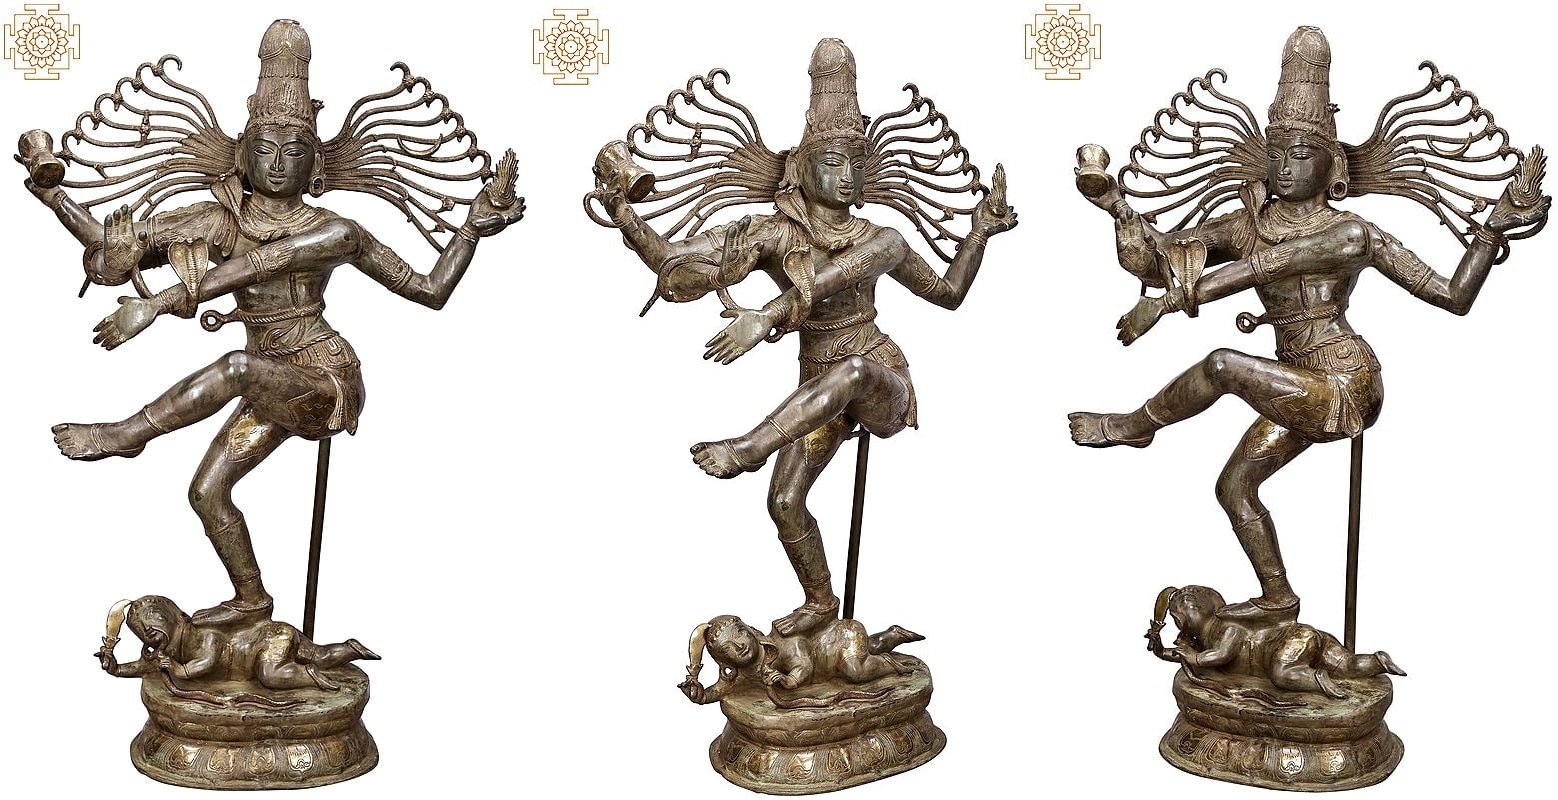 The Science Behind Nataraja Statue aka Dancing Lord Shiva